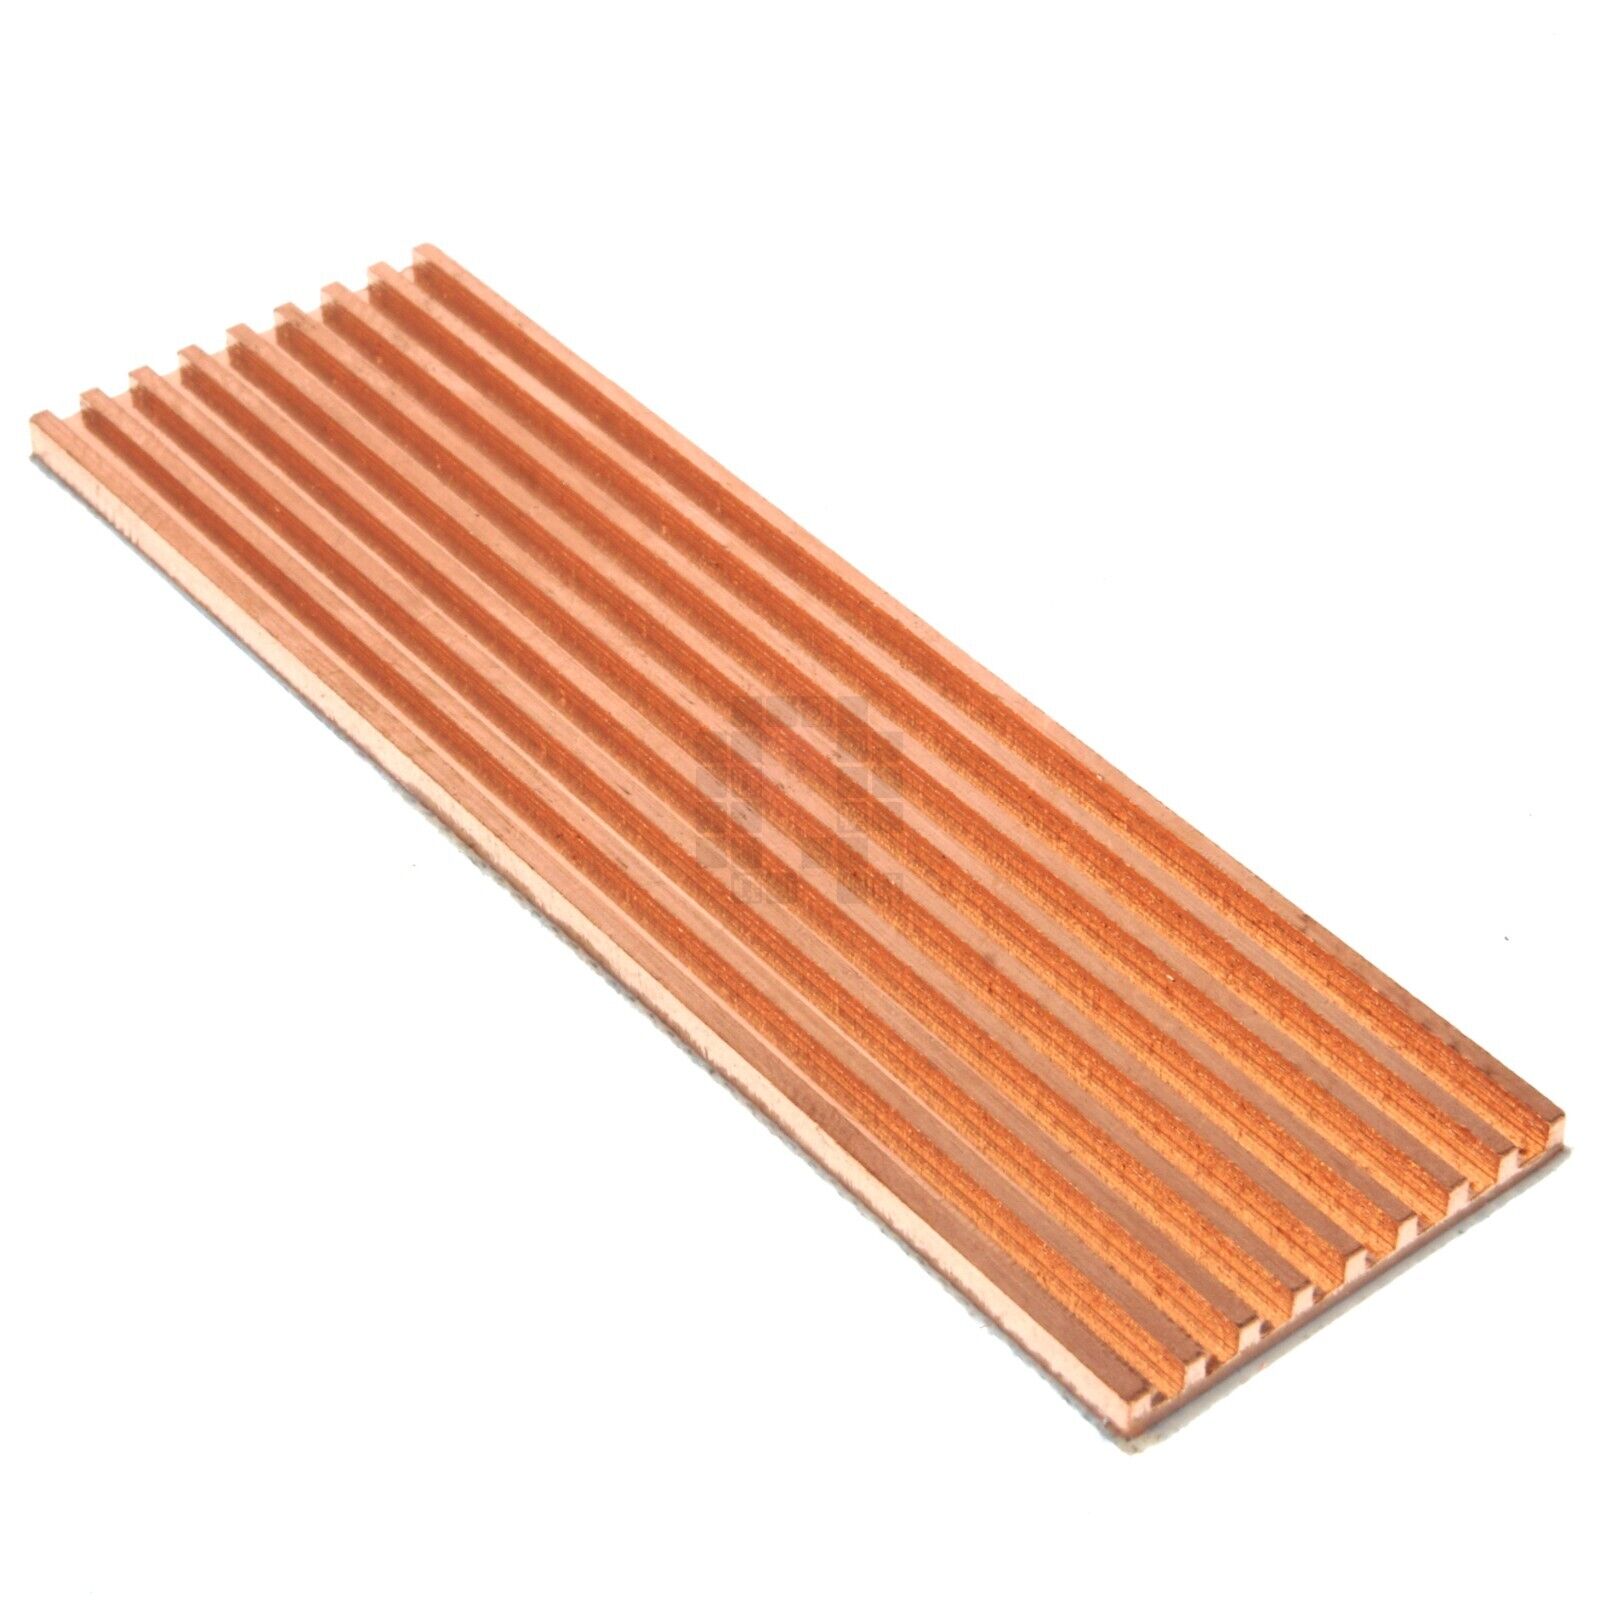 M.2 2280 PCI-E NVME SSD Copper Heatsink w/Thermal Conductive Adhesive 2mm Height